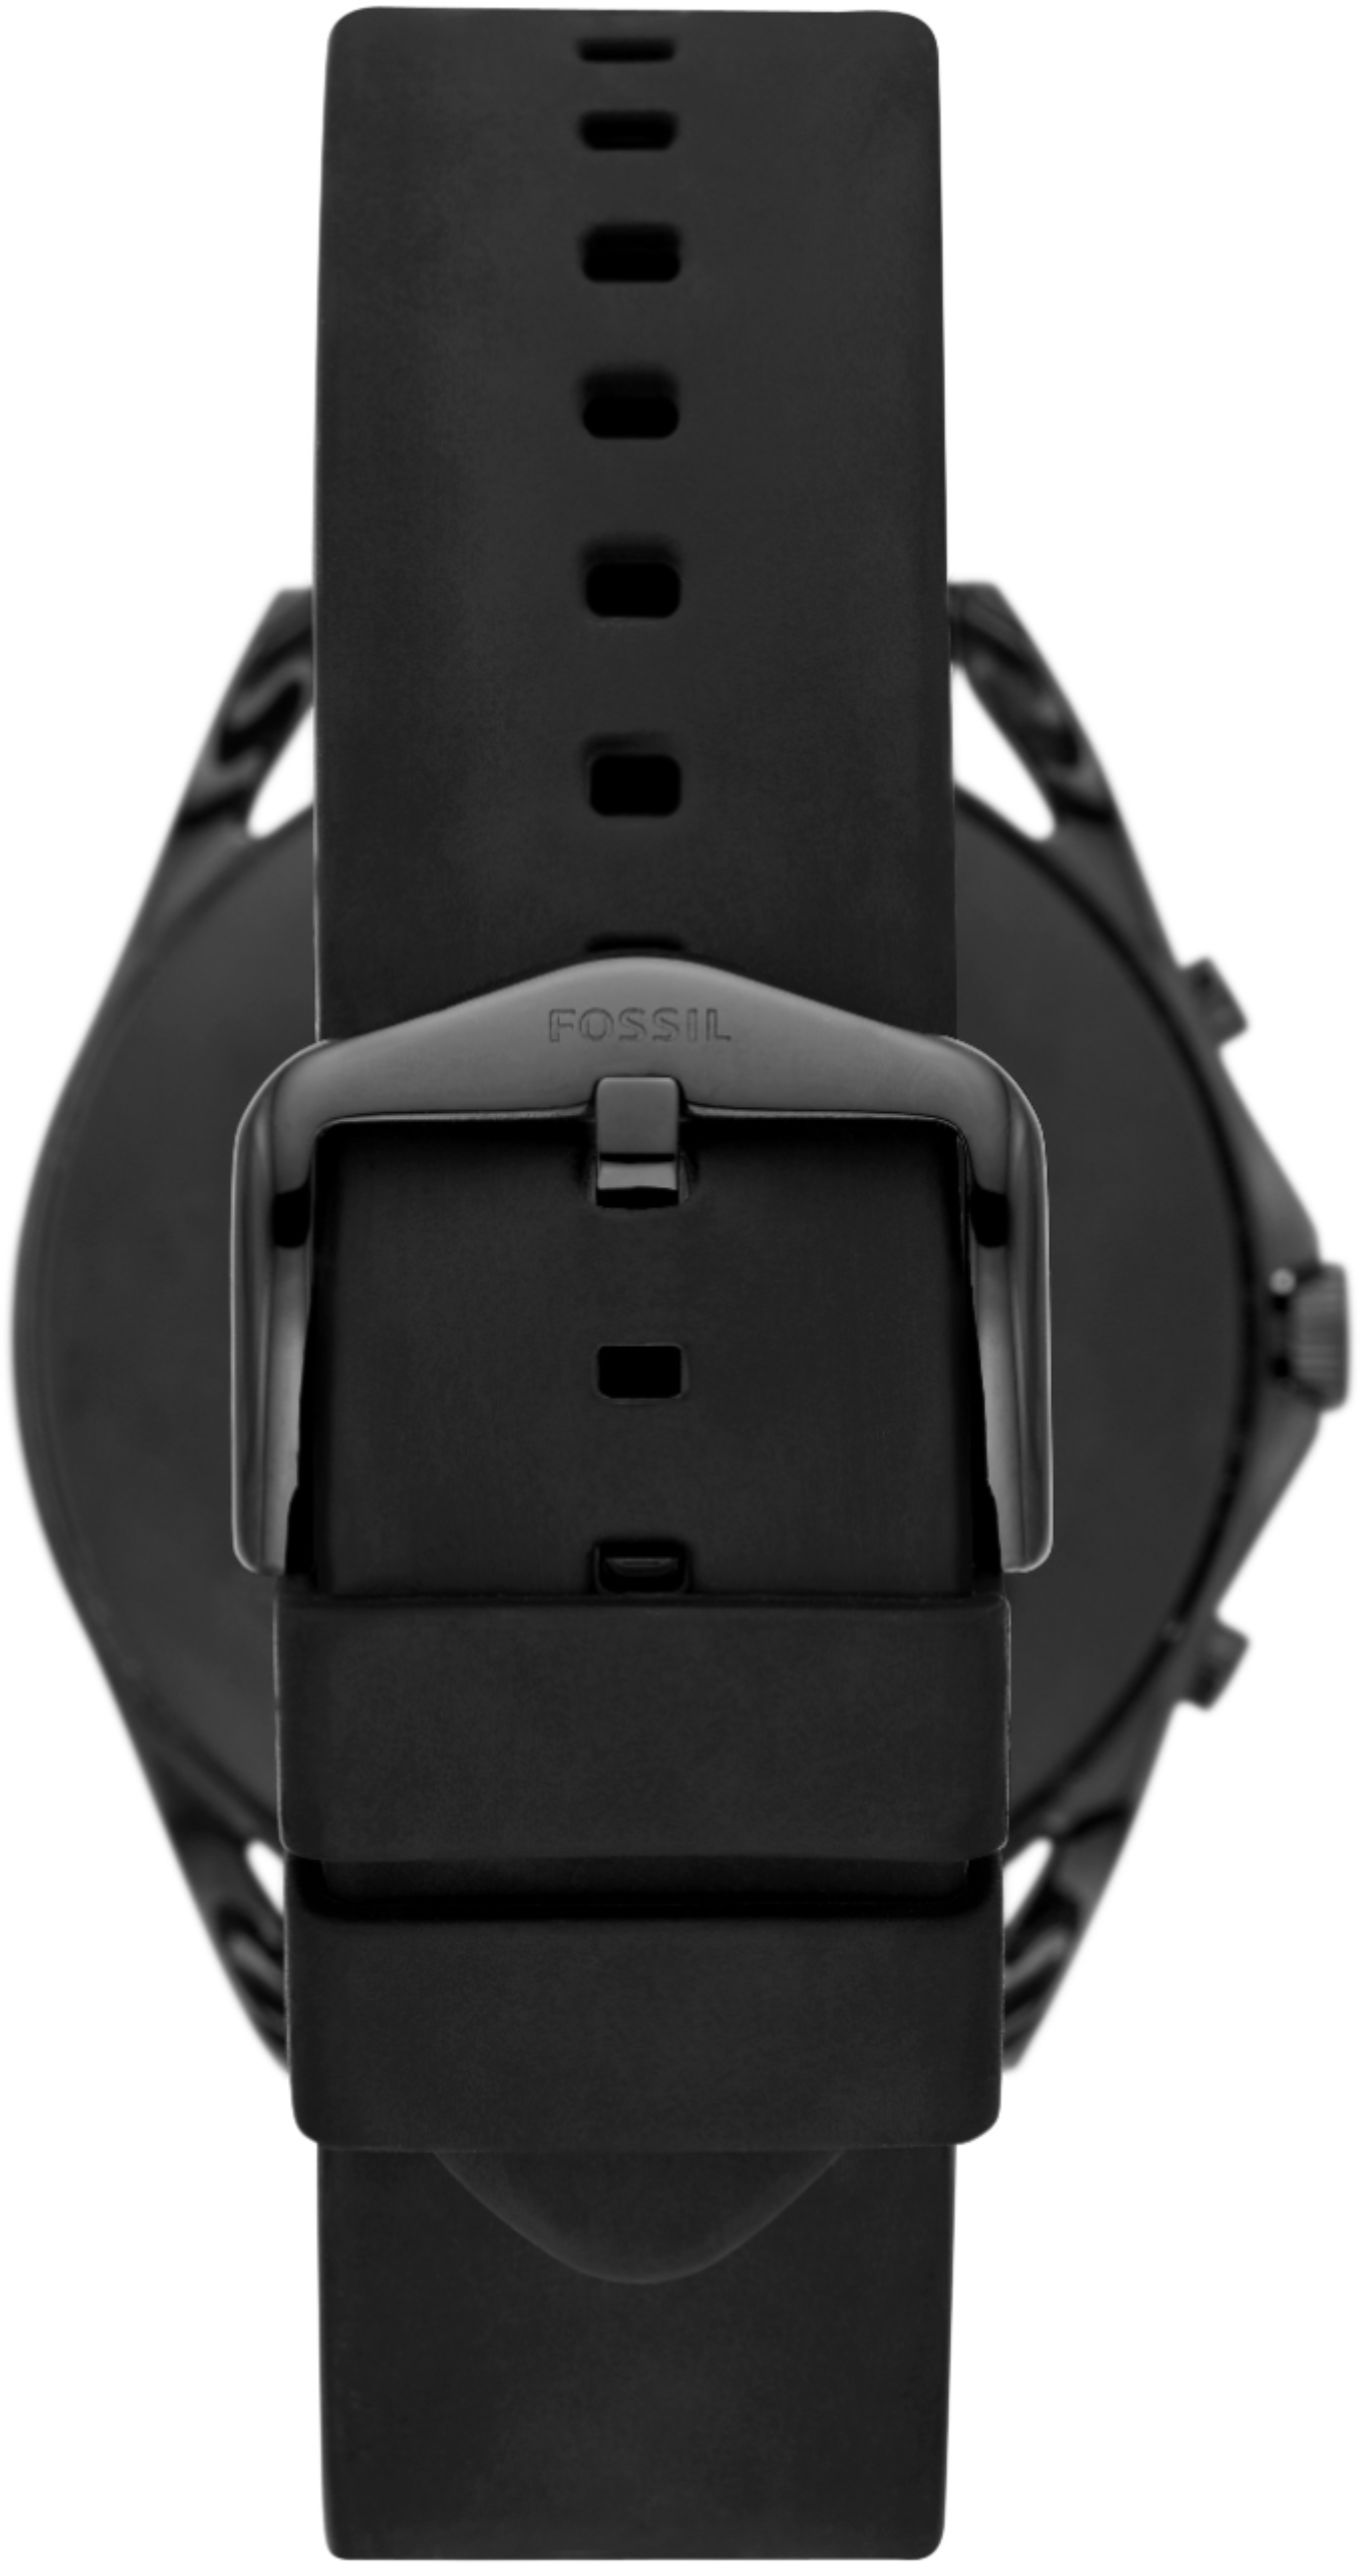 Back View: Fossil - Gen 5 LTE Smartwatch (Cellular) 45mm - Black (Verizon)